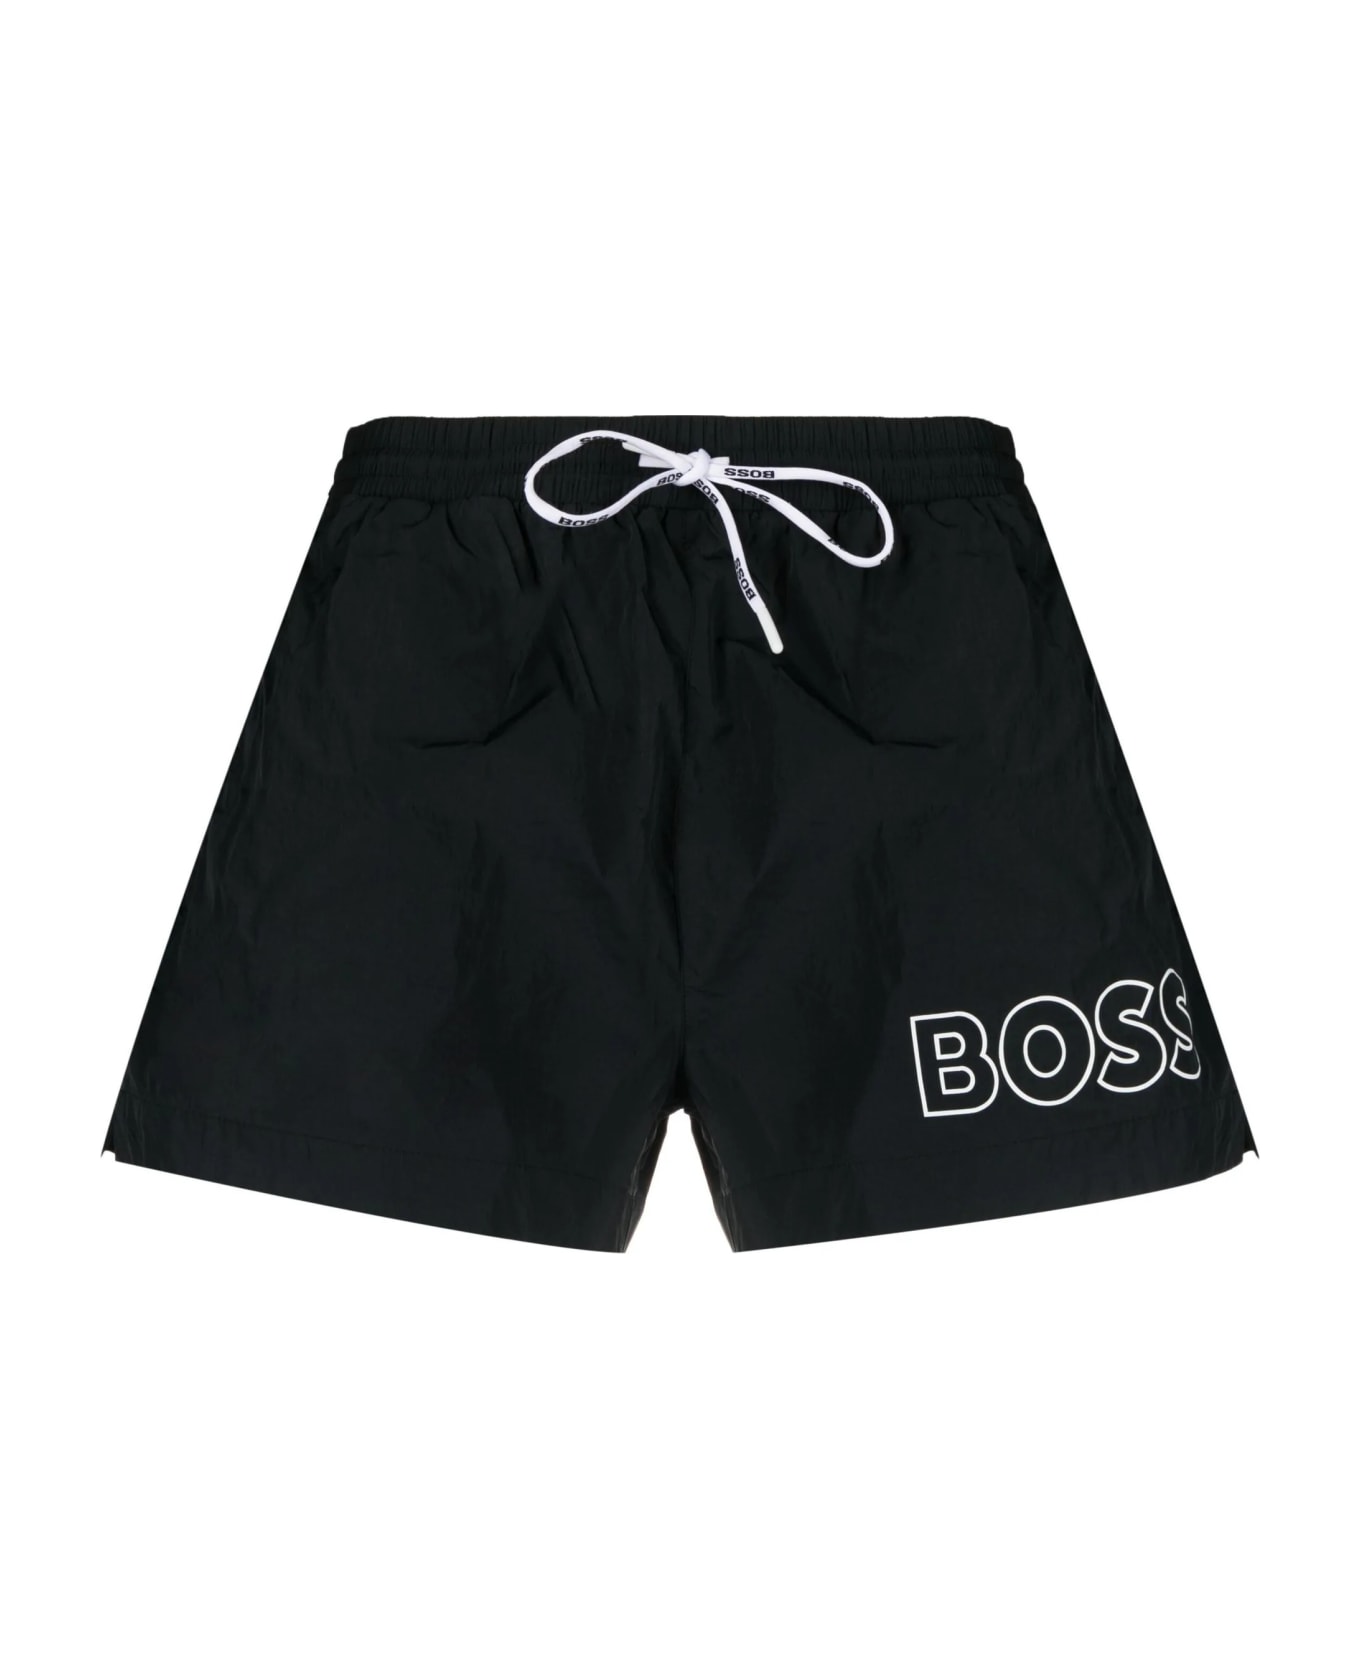 Hugo Boss Black Quick-drying Beach Boxers With Profiled Logo - Black スイムトランクス